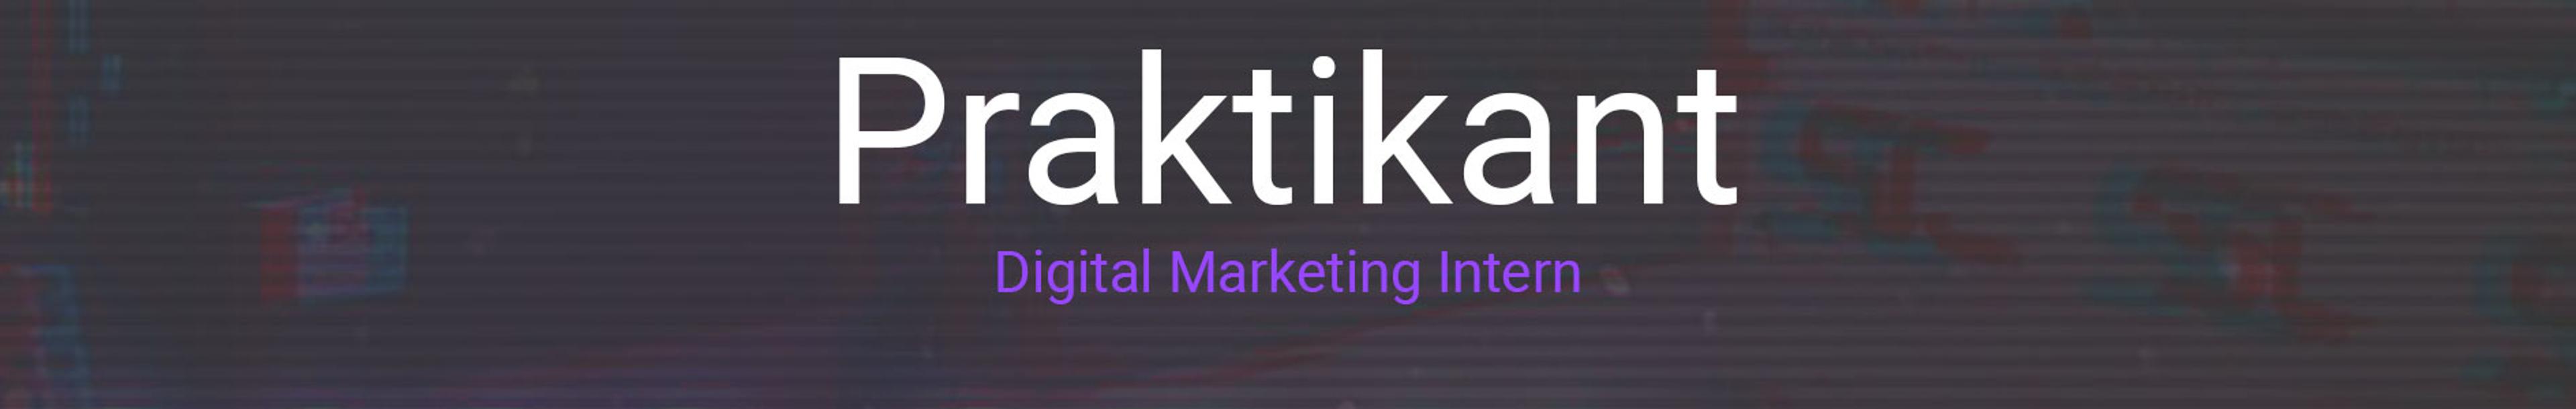 Praktikant - digital marketing intern